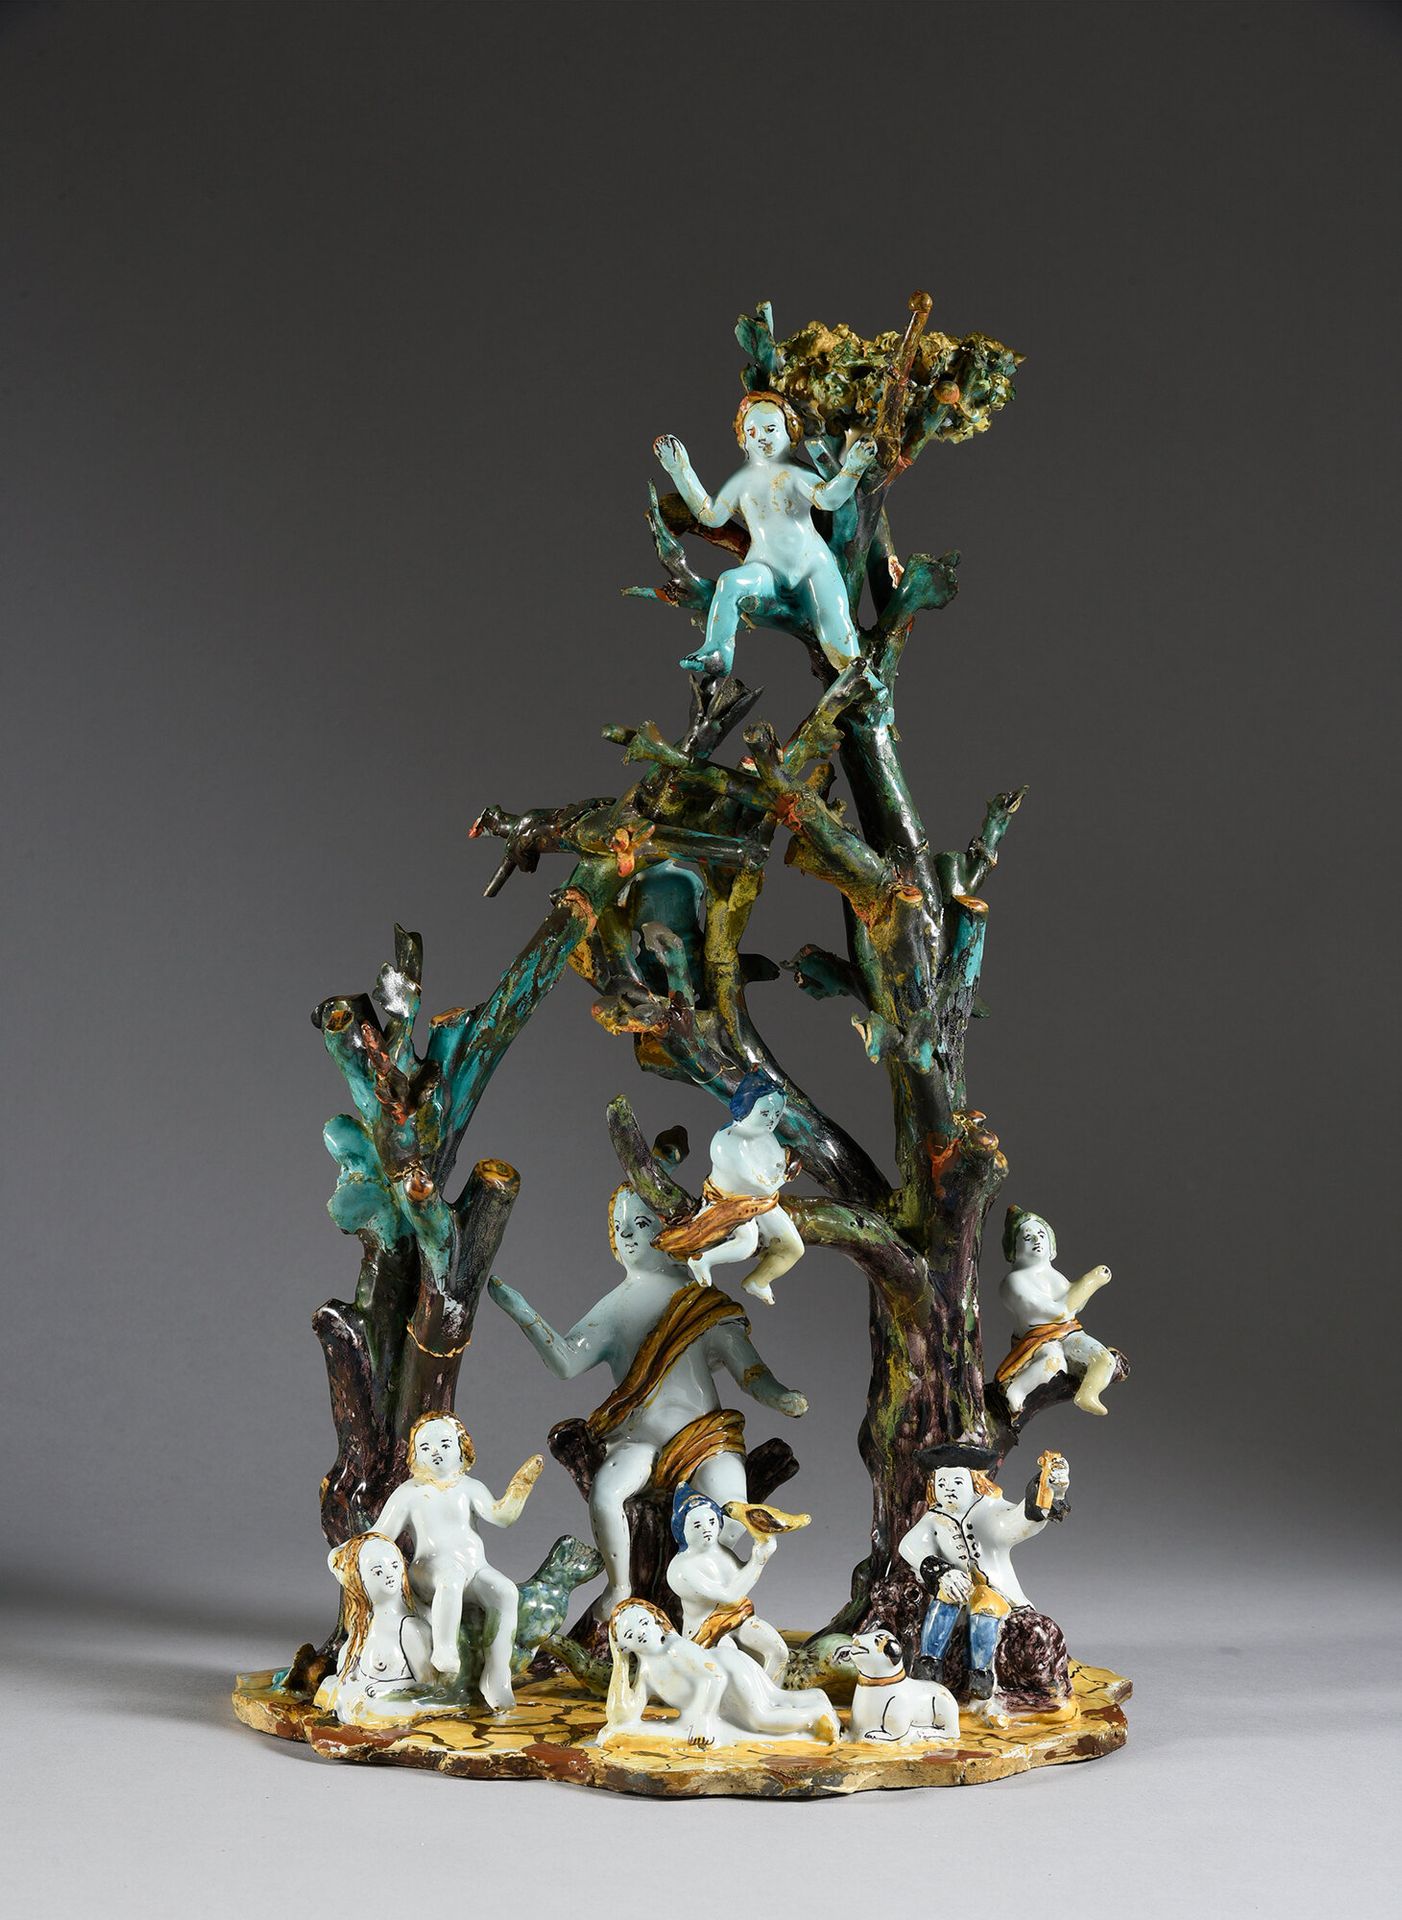 ALLEMAGNE ?, XVIIIe siècle 
陶器群，雕奧爾菲斯坐在樹幹上，周圍有許多奇異的人物和動物，兩棵樹上有人物、鳥類和巢，橢圓形底，有白色、赭&hellip;